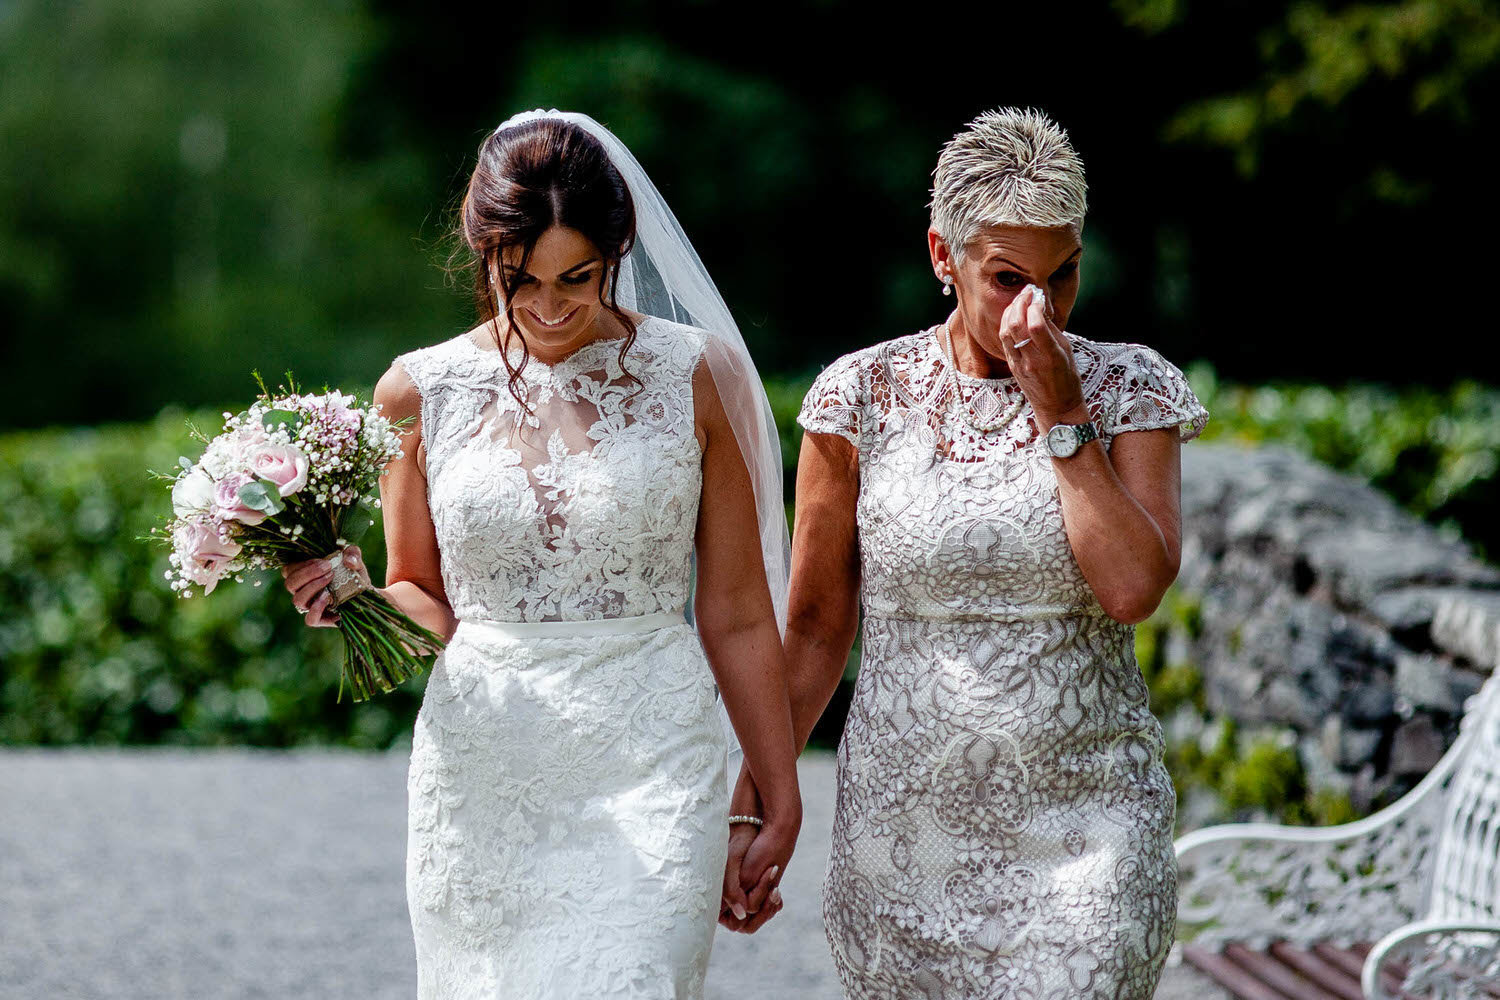 bride walkijg down the aisle  during a bristol outdoor wedding ceremony